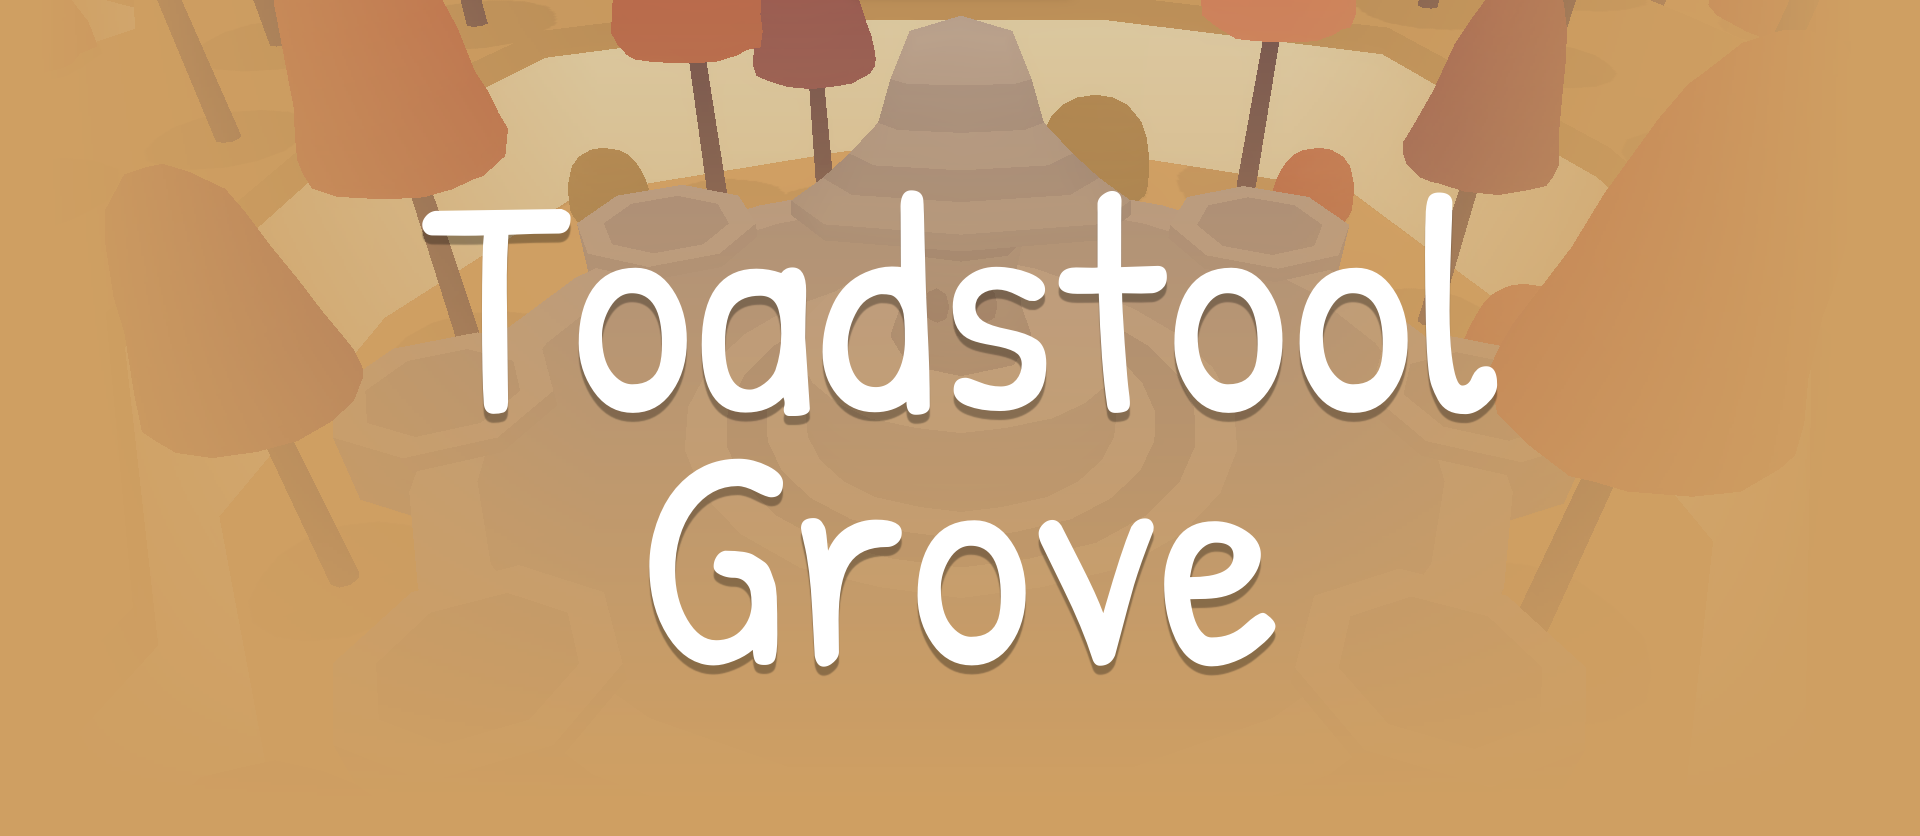 Toadstool Grove